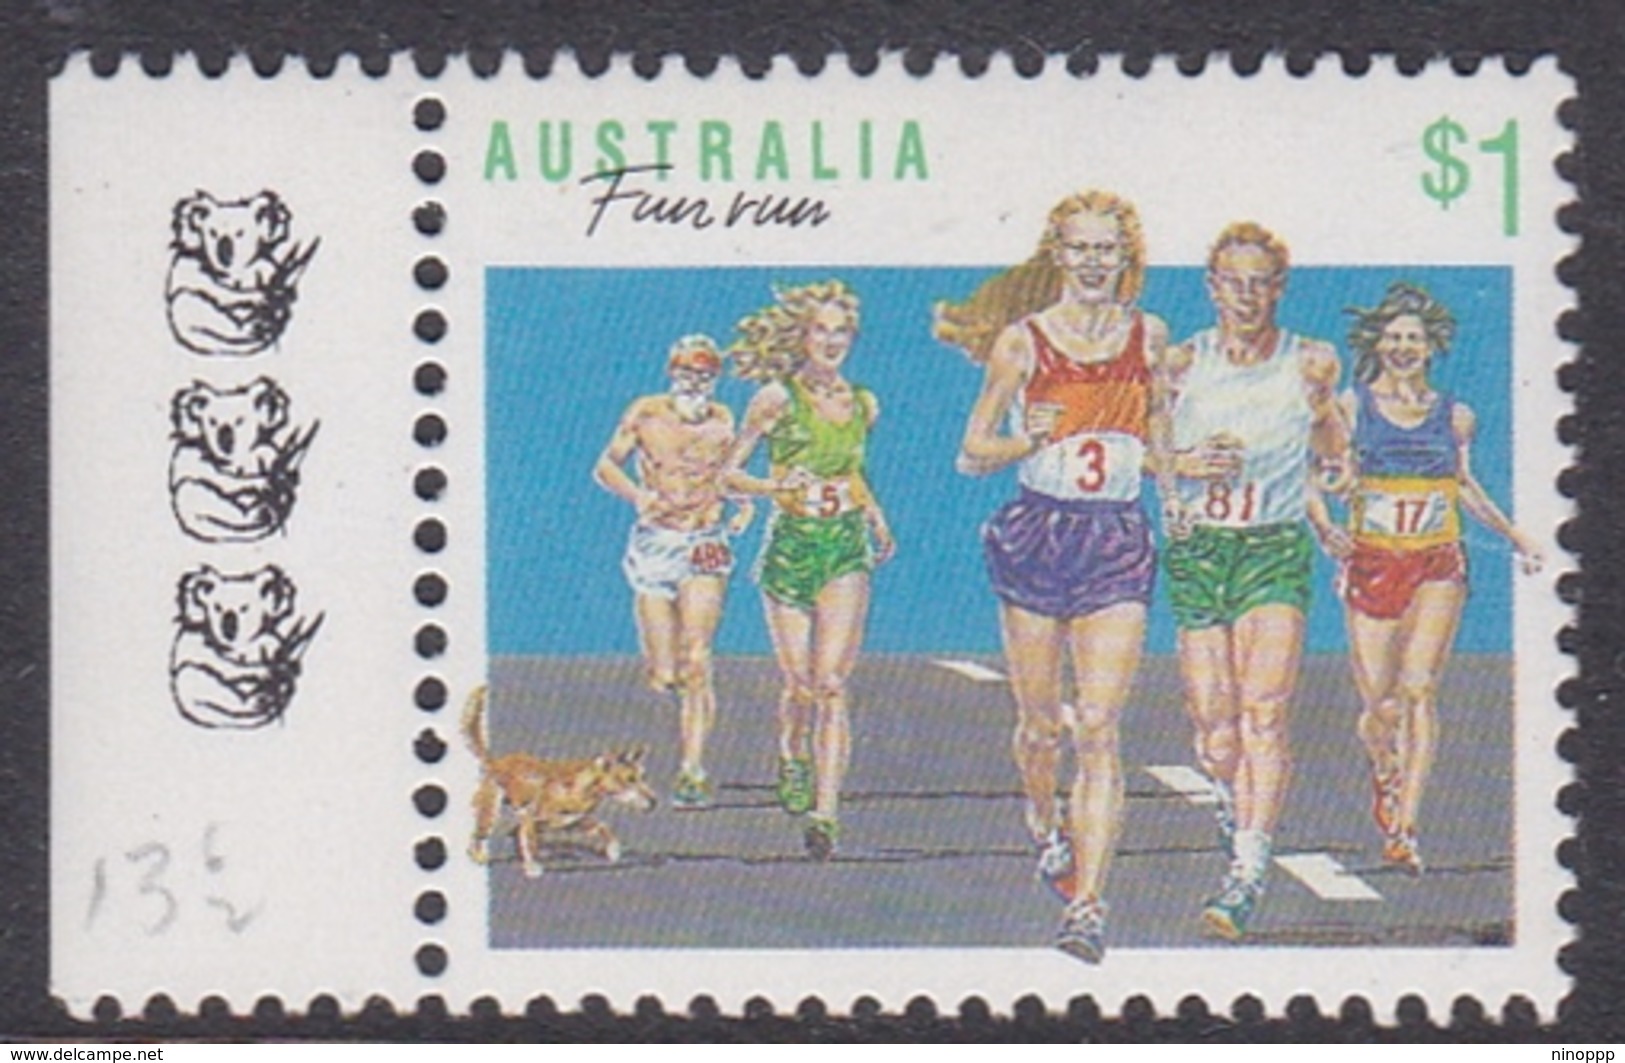 Australia ASC 1231d 1990 Sports $ 1.00 Fun Run 3 Koalas, Mint Never Hinged - Prove & Ristampe